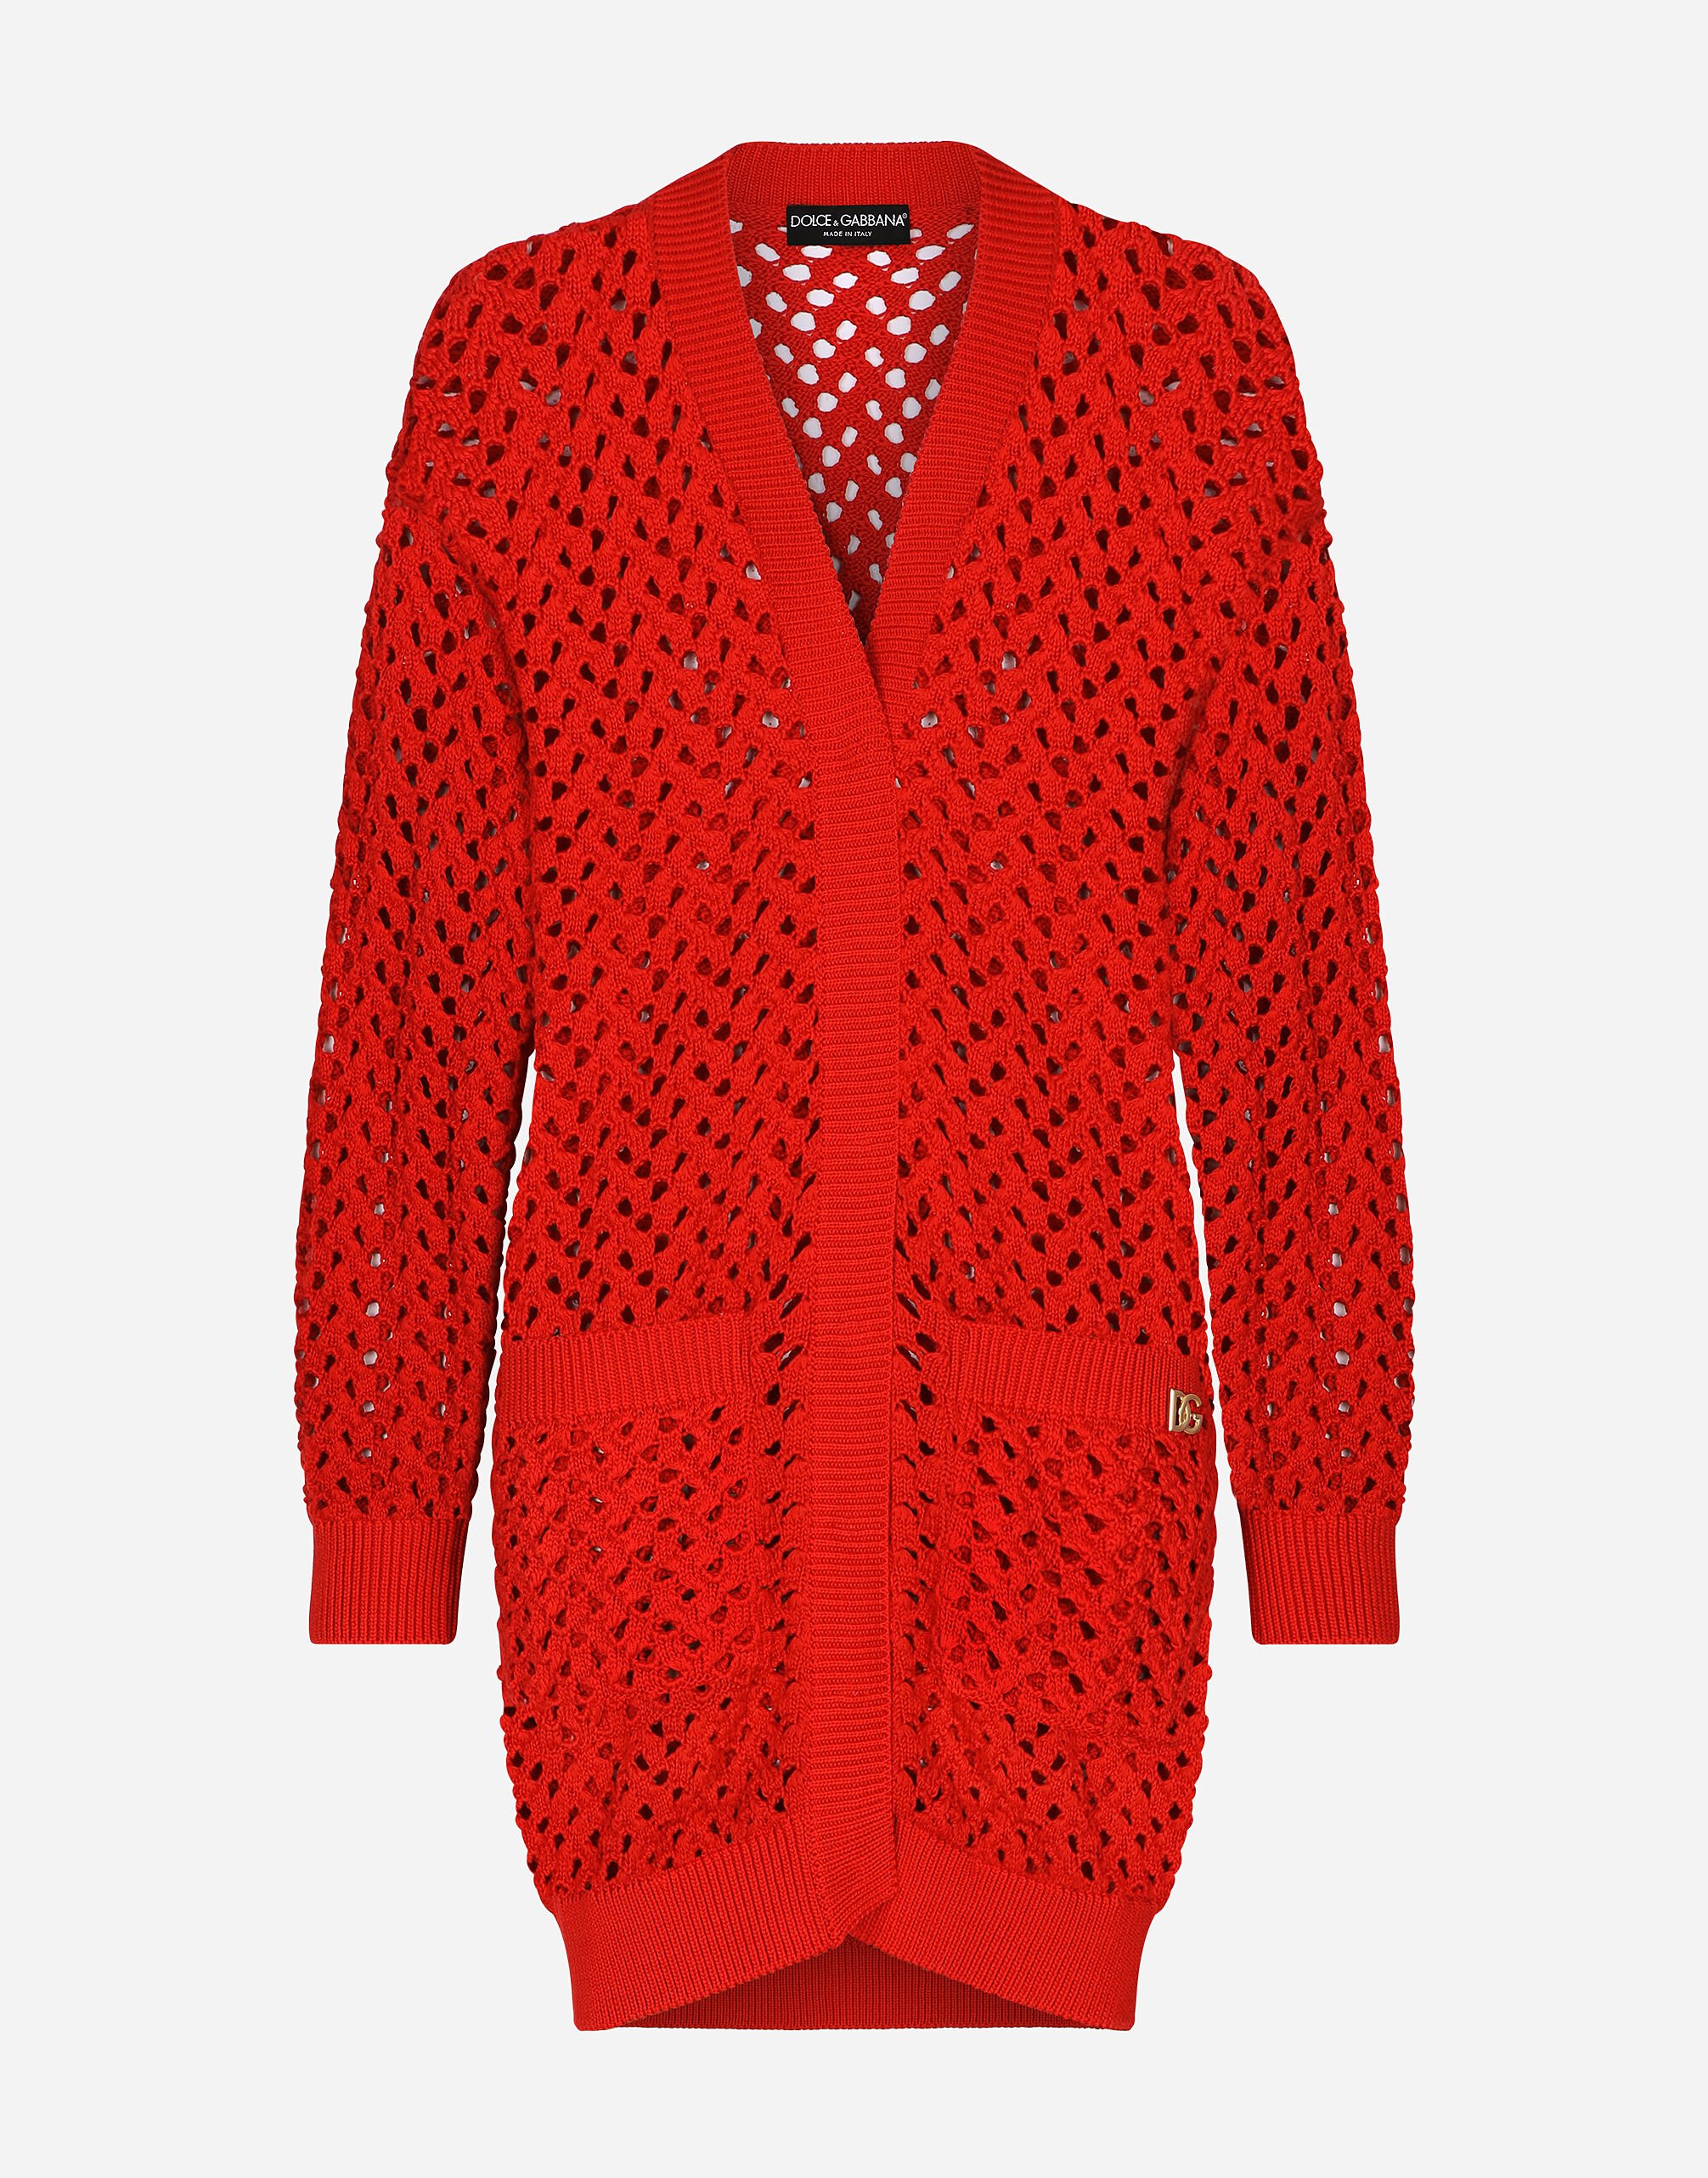 Dolce&Gabbana Long crochet cardigan Red F79BUTFURHM